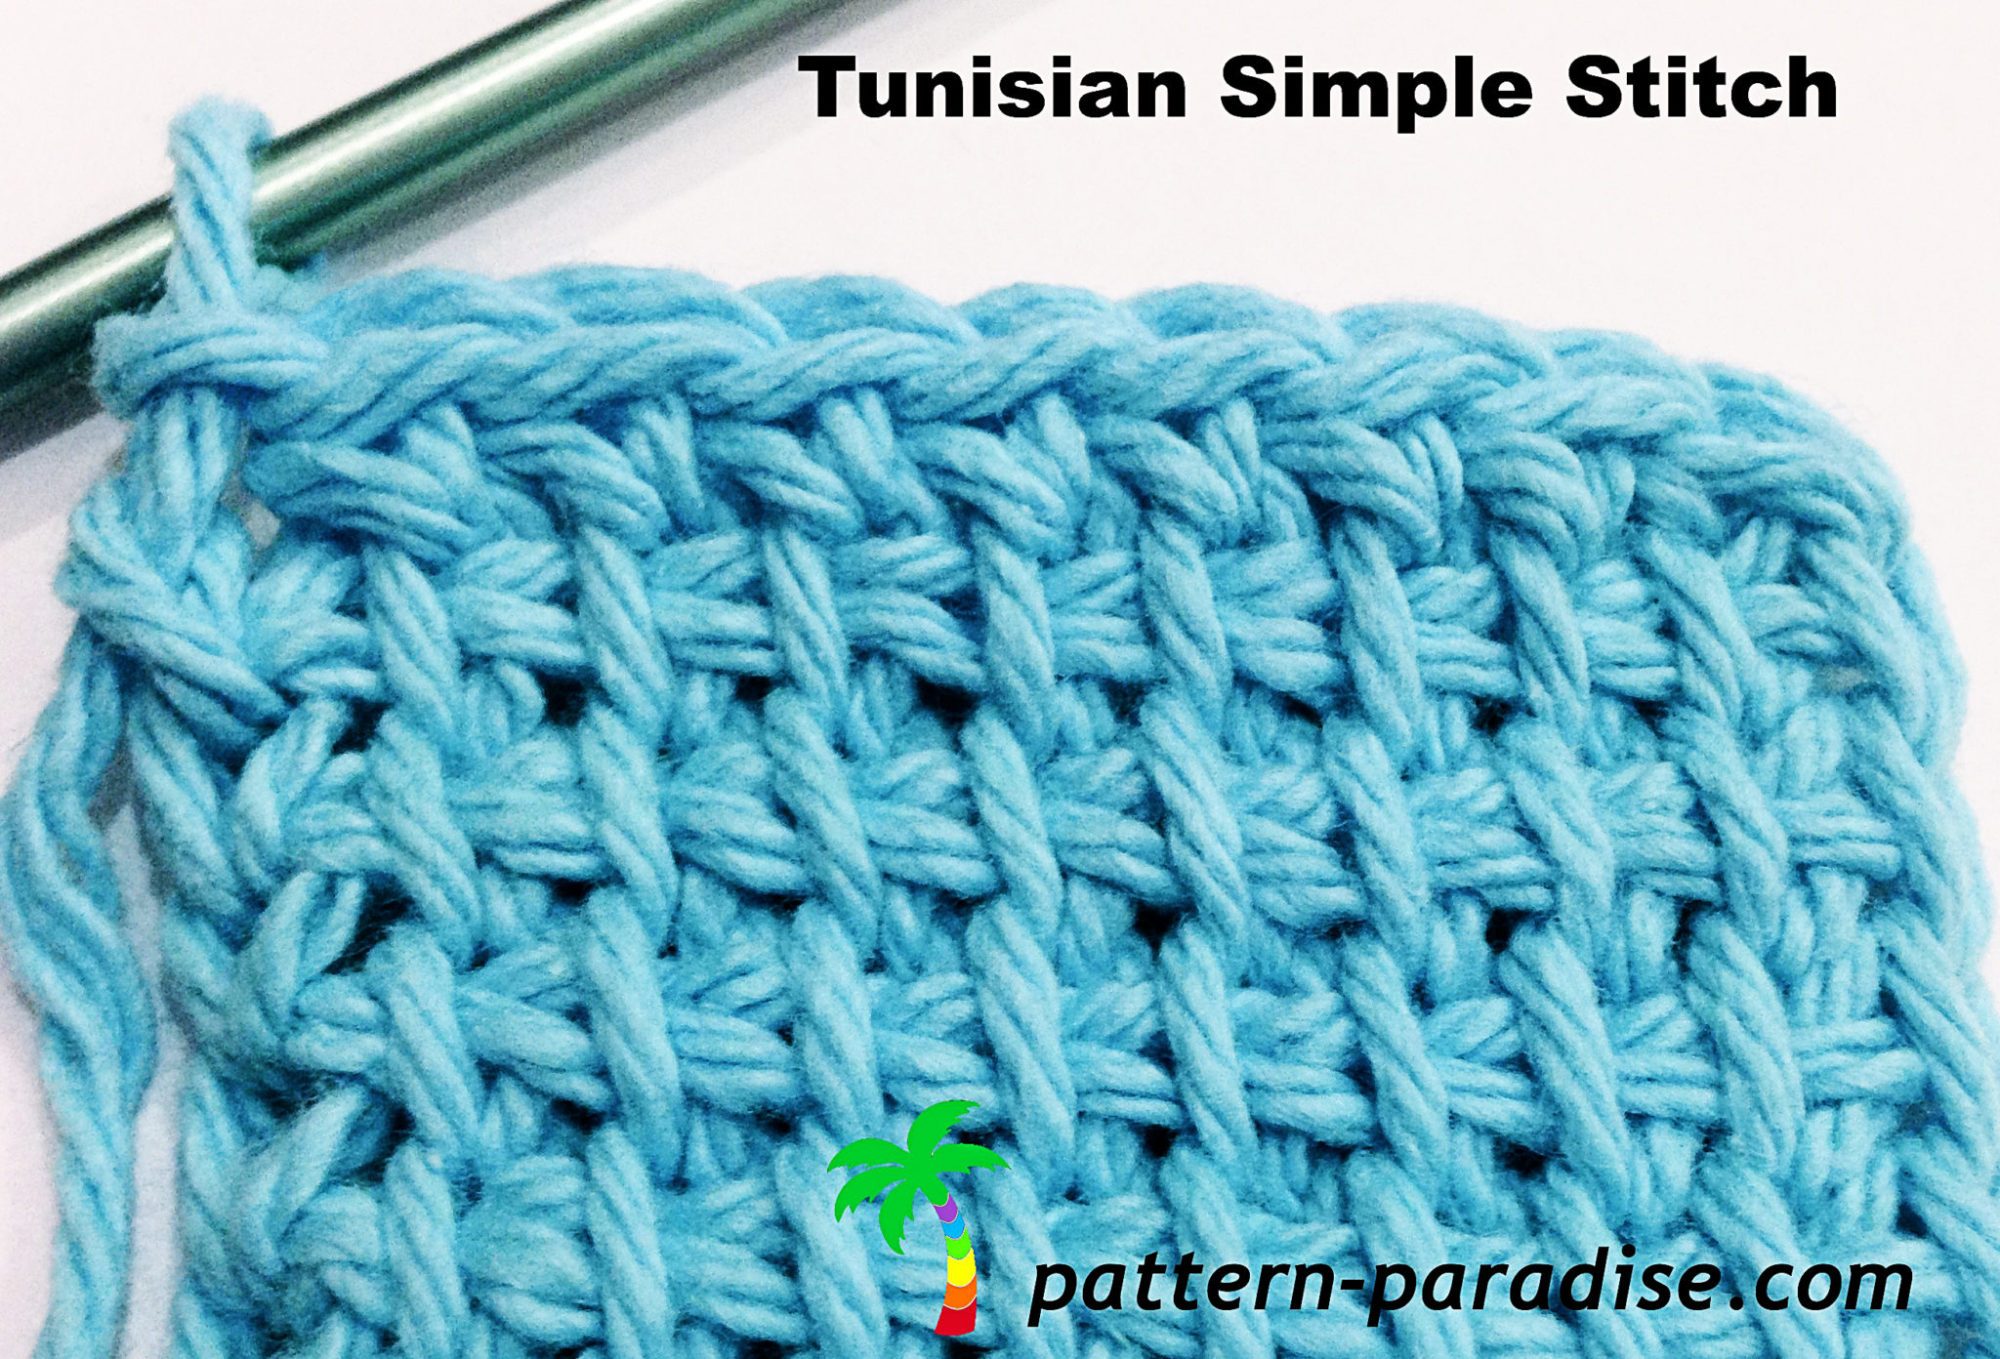 Tutorial: Tunisian Simple Stitch | Pattern Paradise